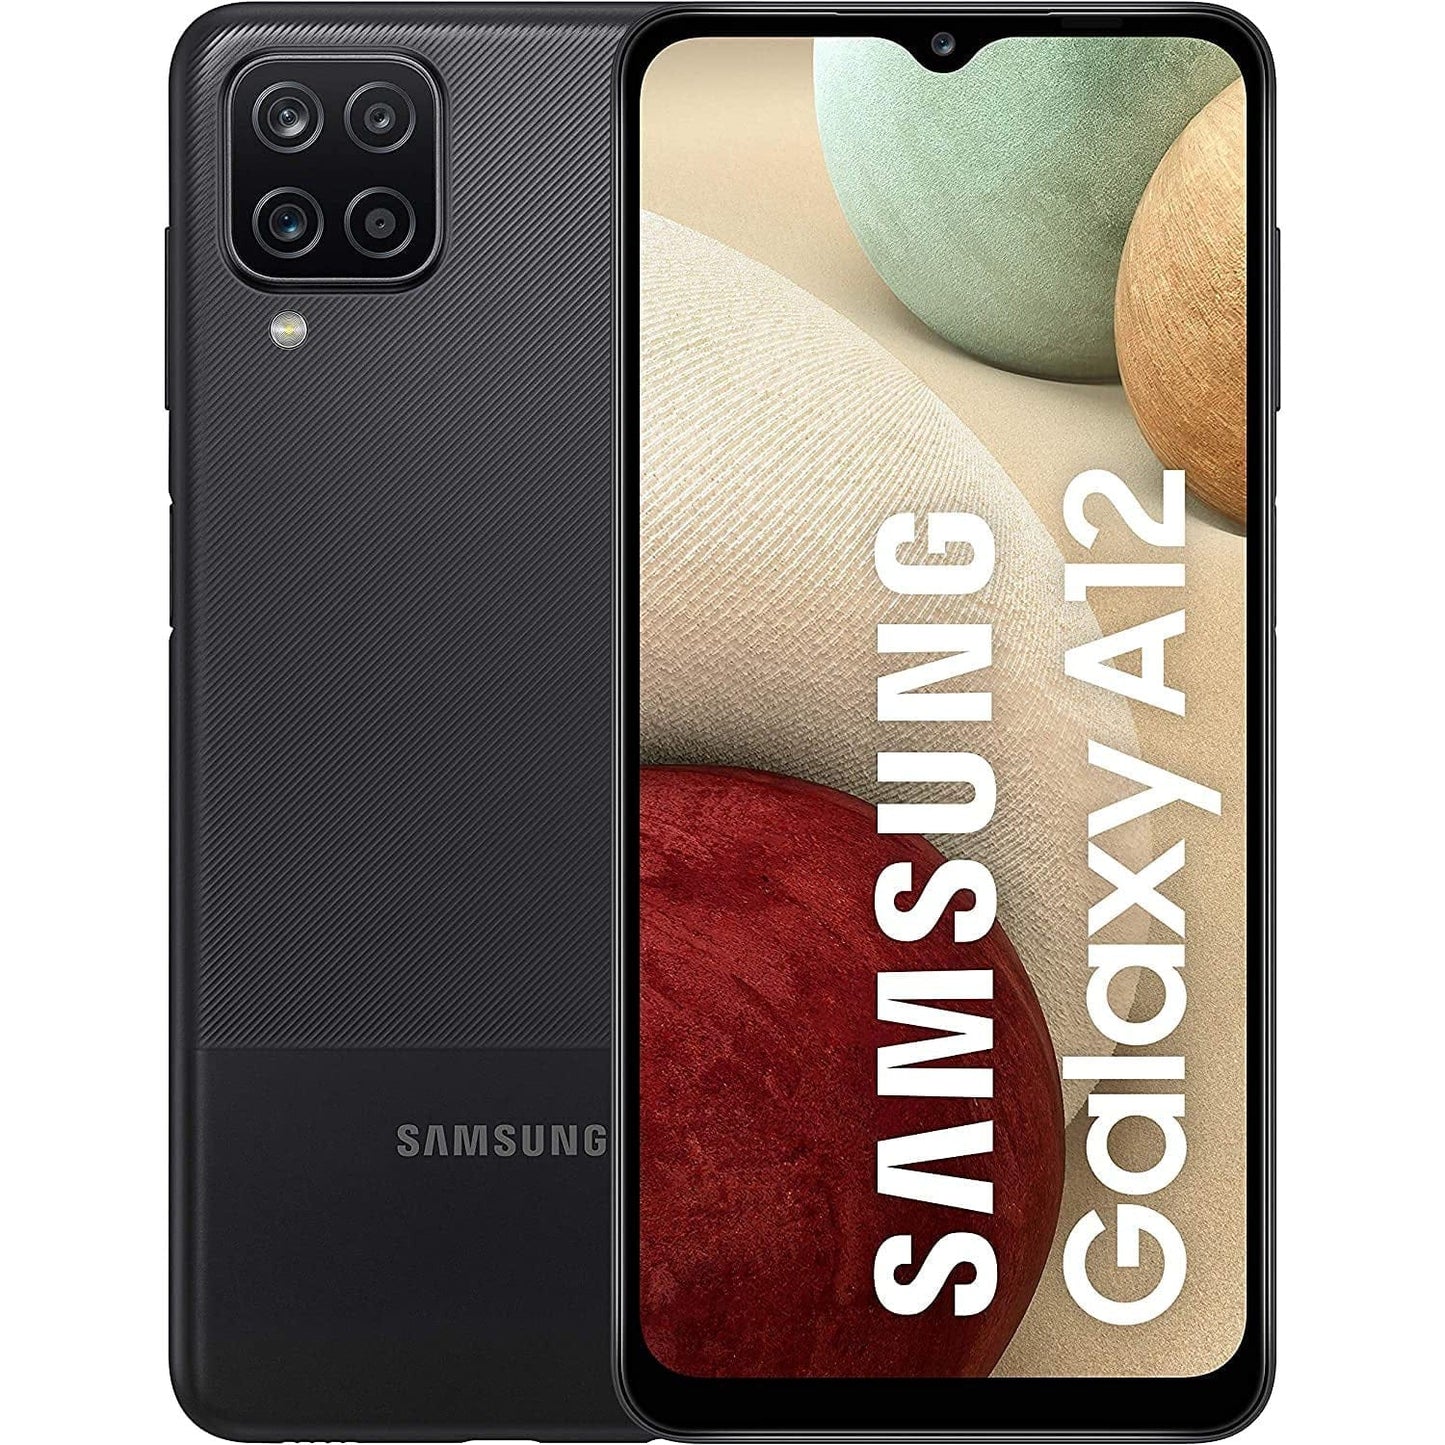 Samsung Galaxy A12 A125U 32gb GSM-Unlocked-CDMA Android Smartpho